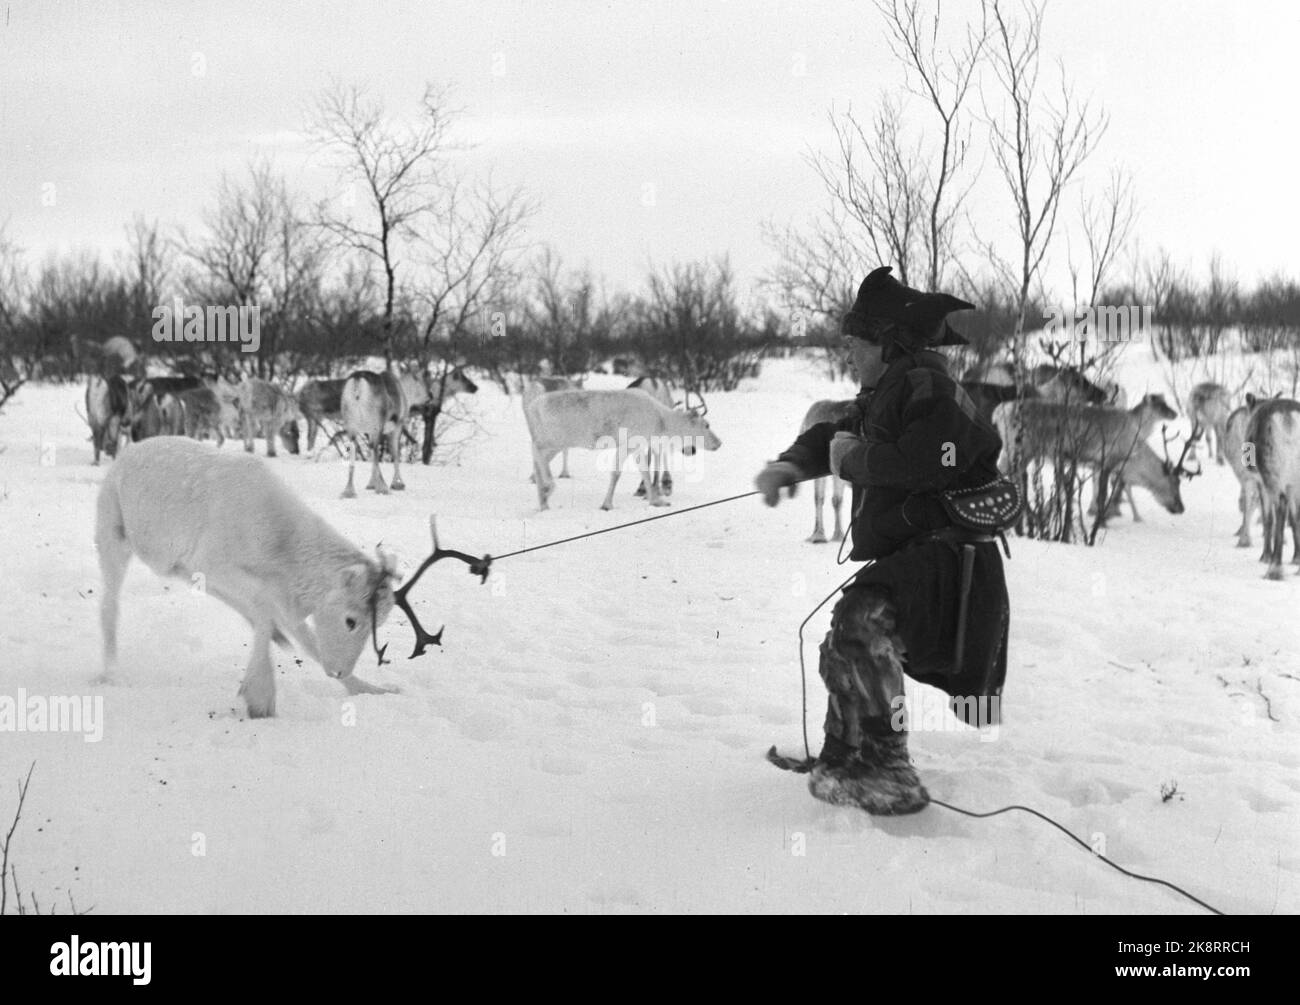 Karasjok 1952. La vita quotidiana dei Sami a Karasjok. Qui vediamo una stessa renna prigioniera con il lazo. Foto: Sverre A. Børretzen / corrente / NTB Foto Stock